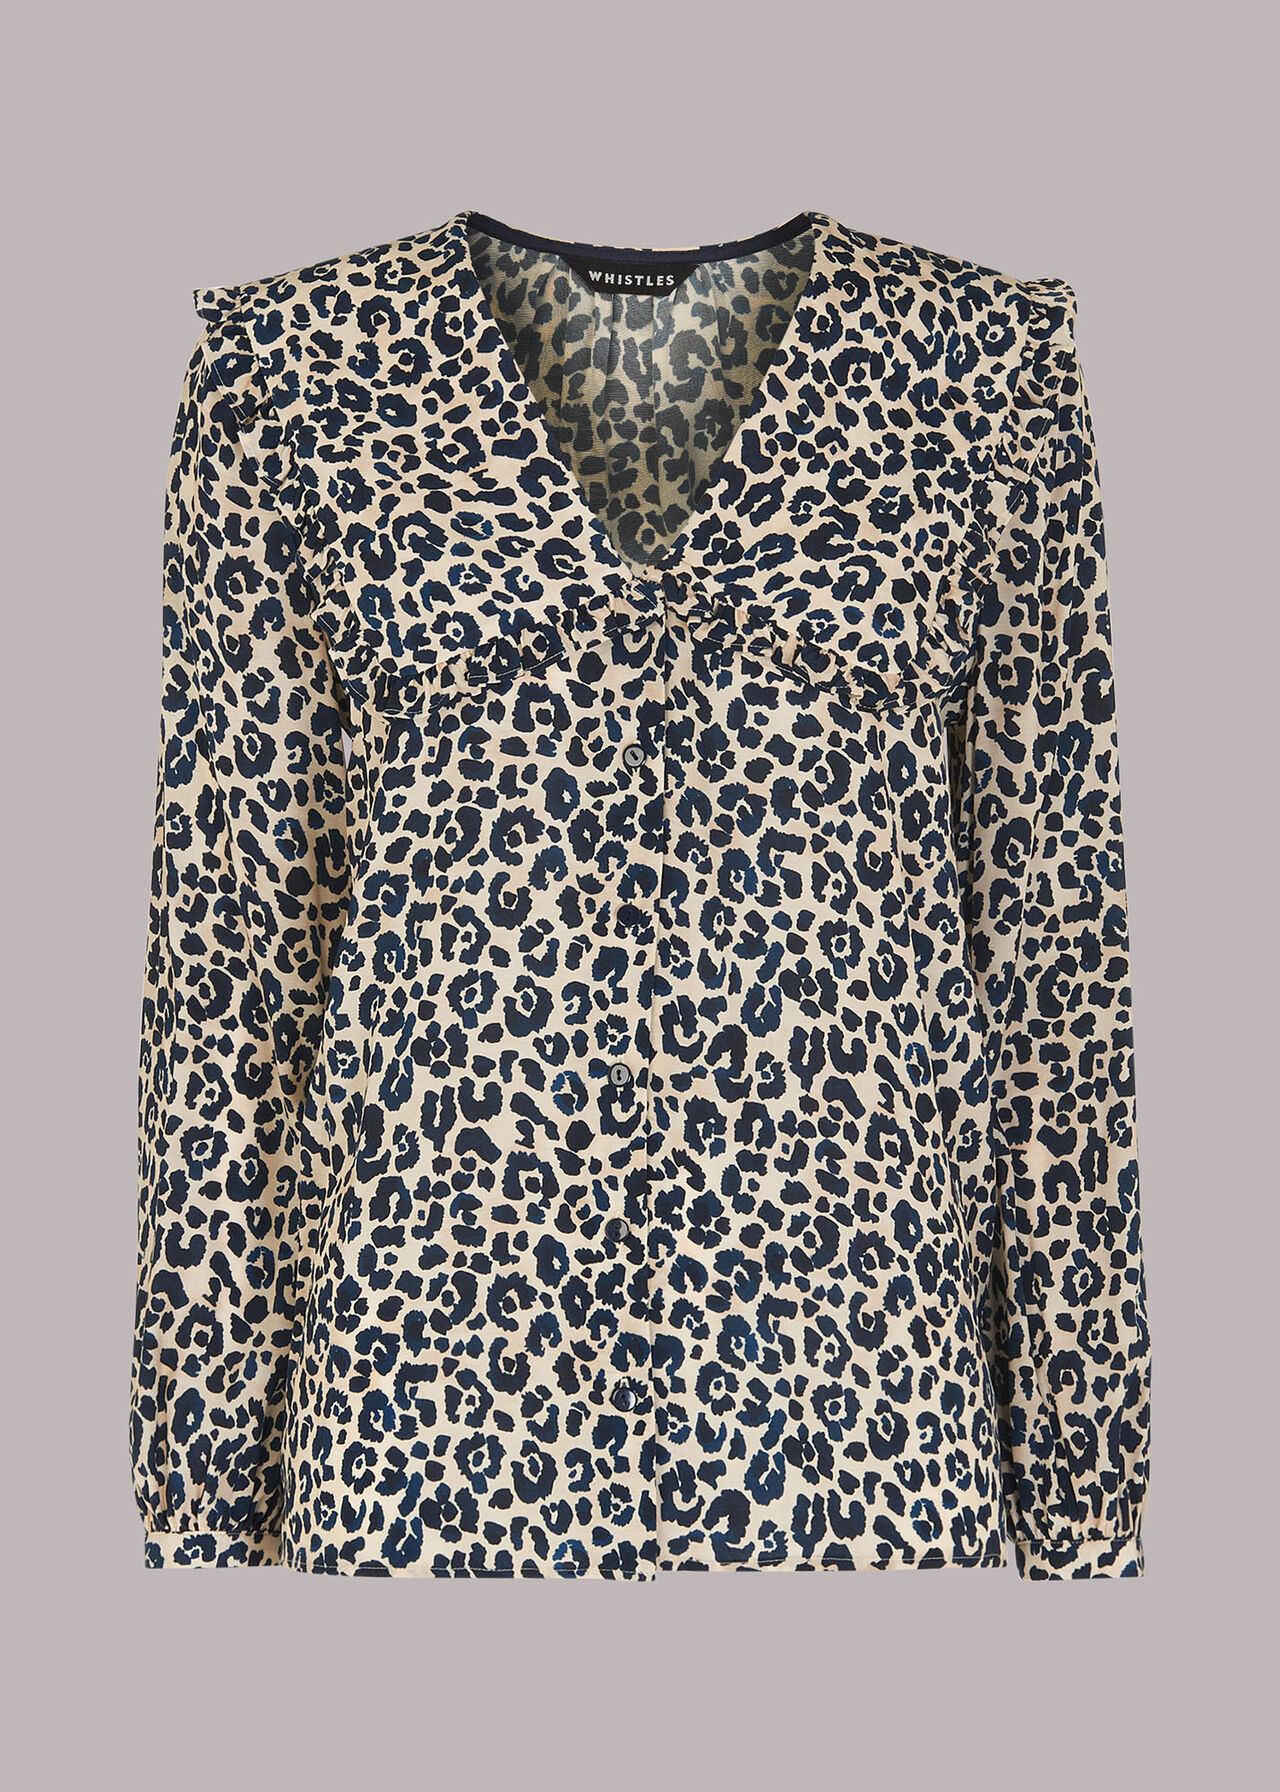 Leopard Print Cheetah Print Collar Top | WHISTLES